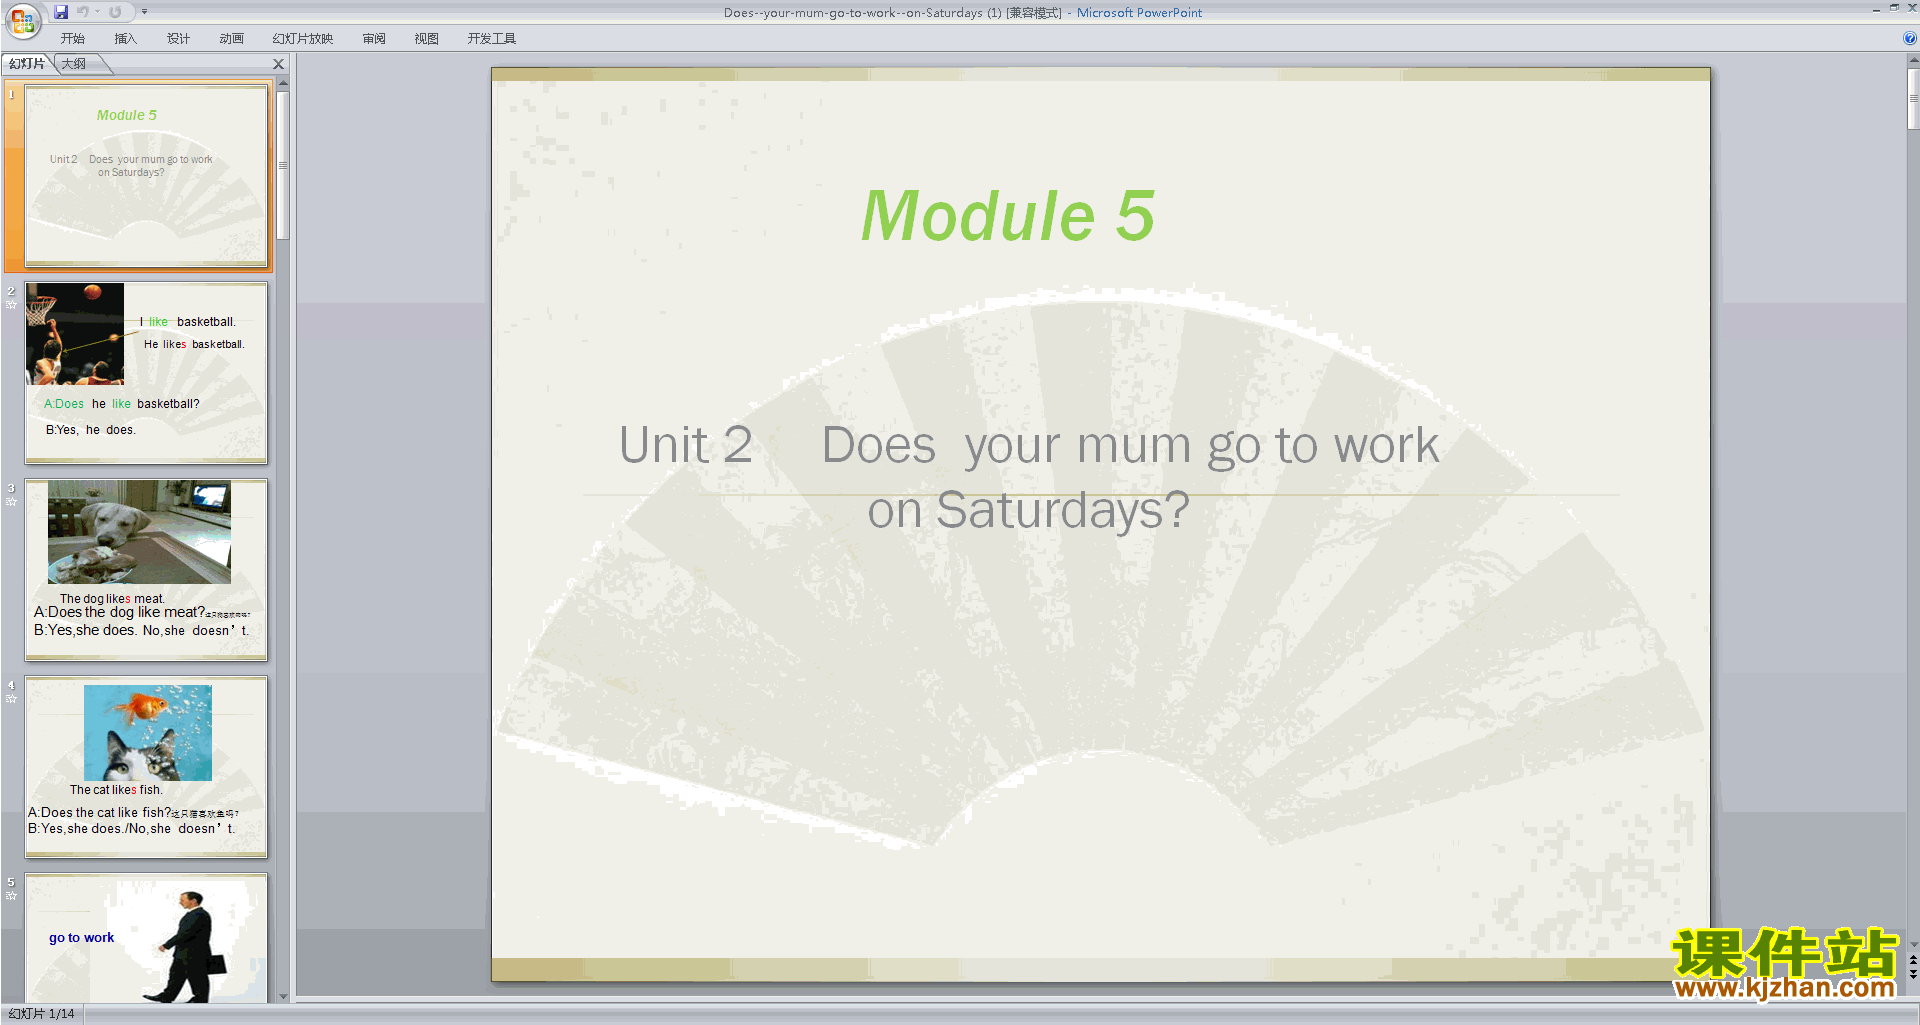 Module5 Does your mum go to work on Saturdayspptμ